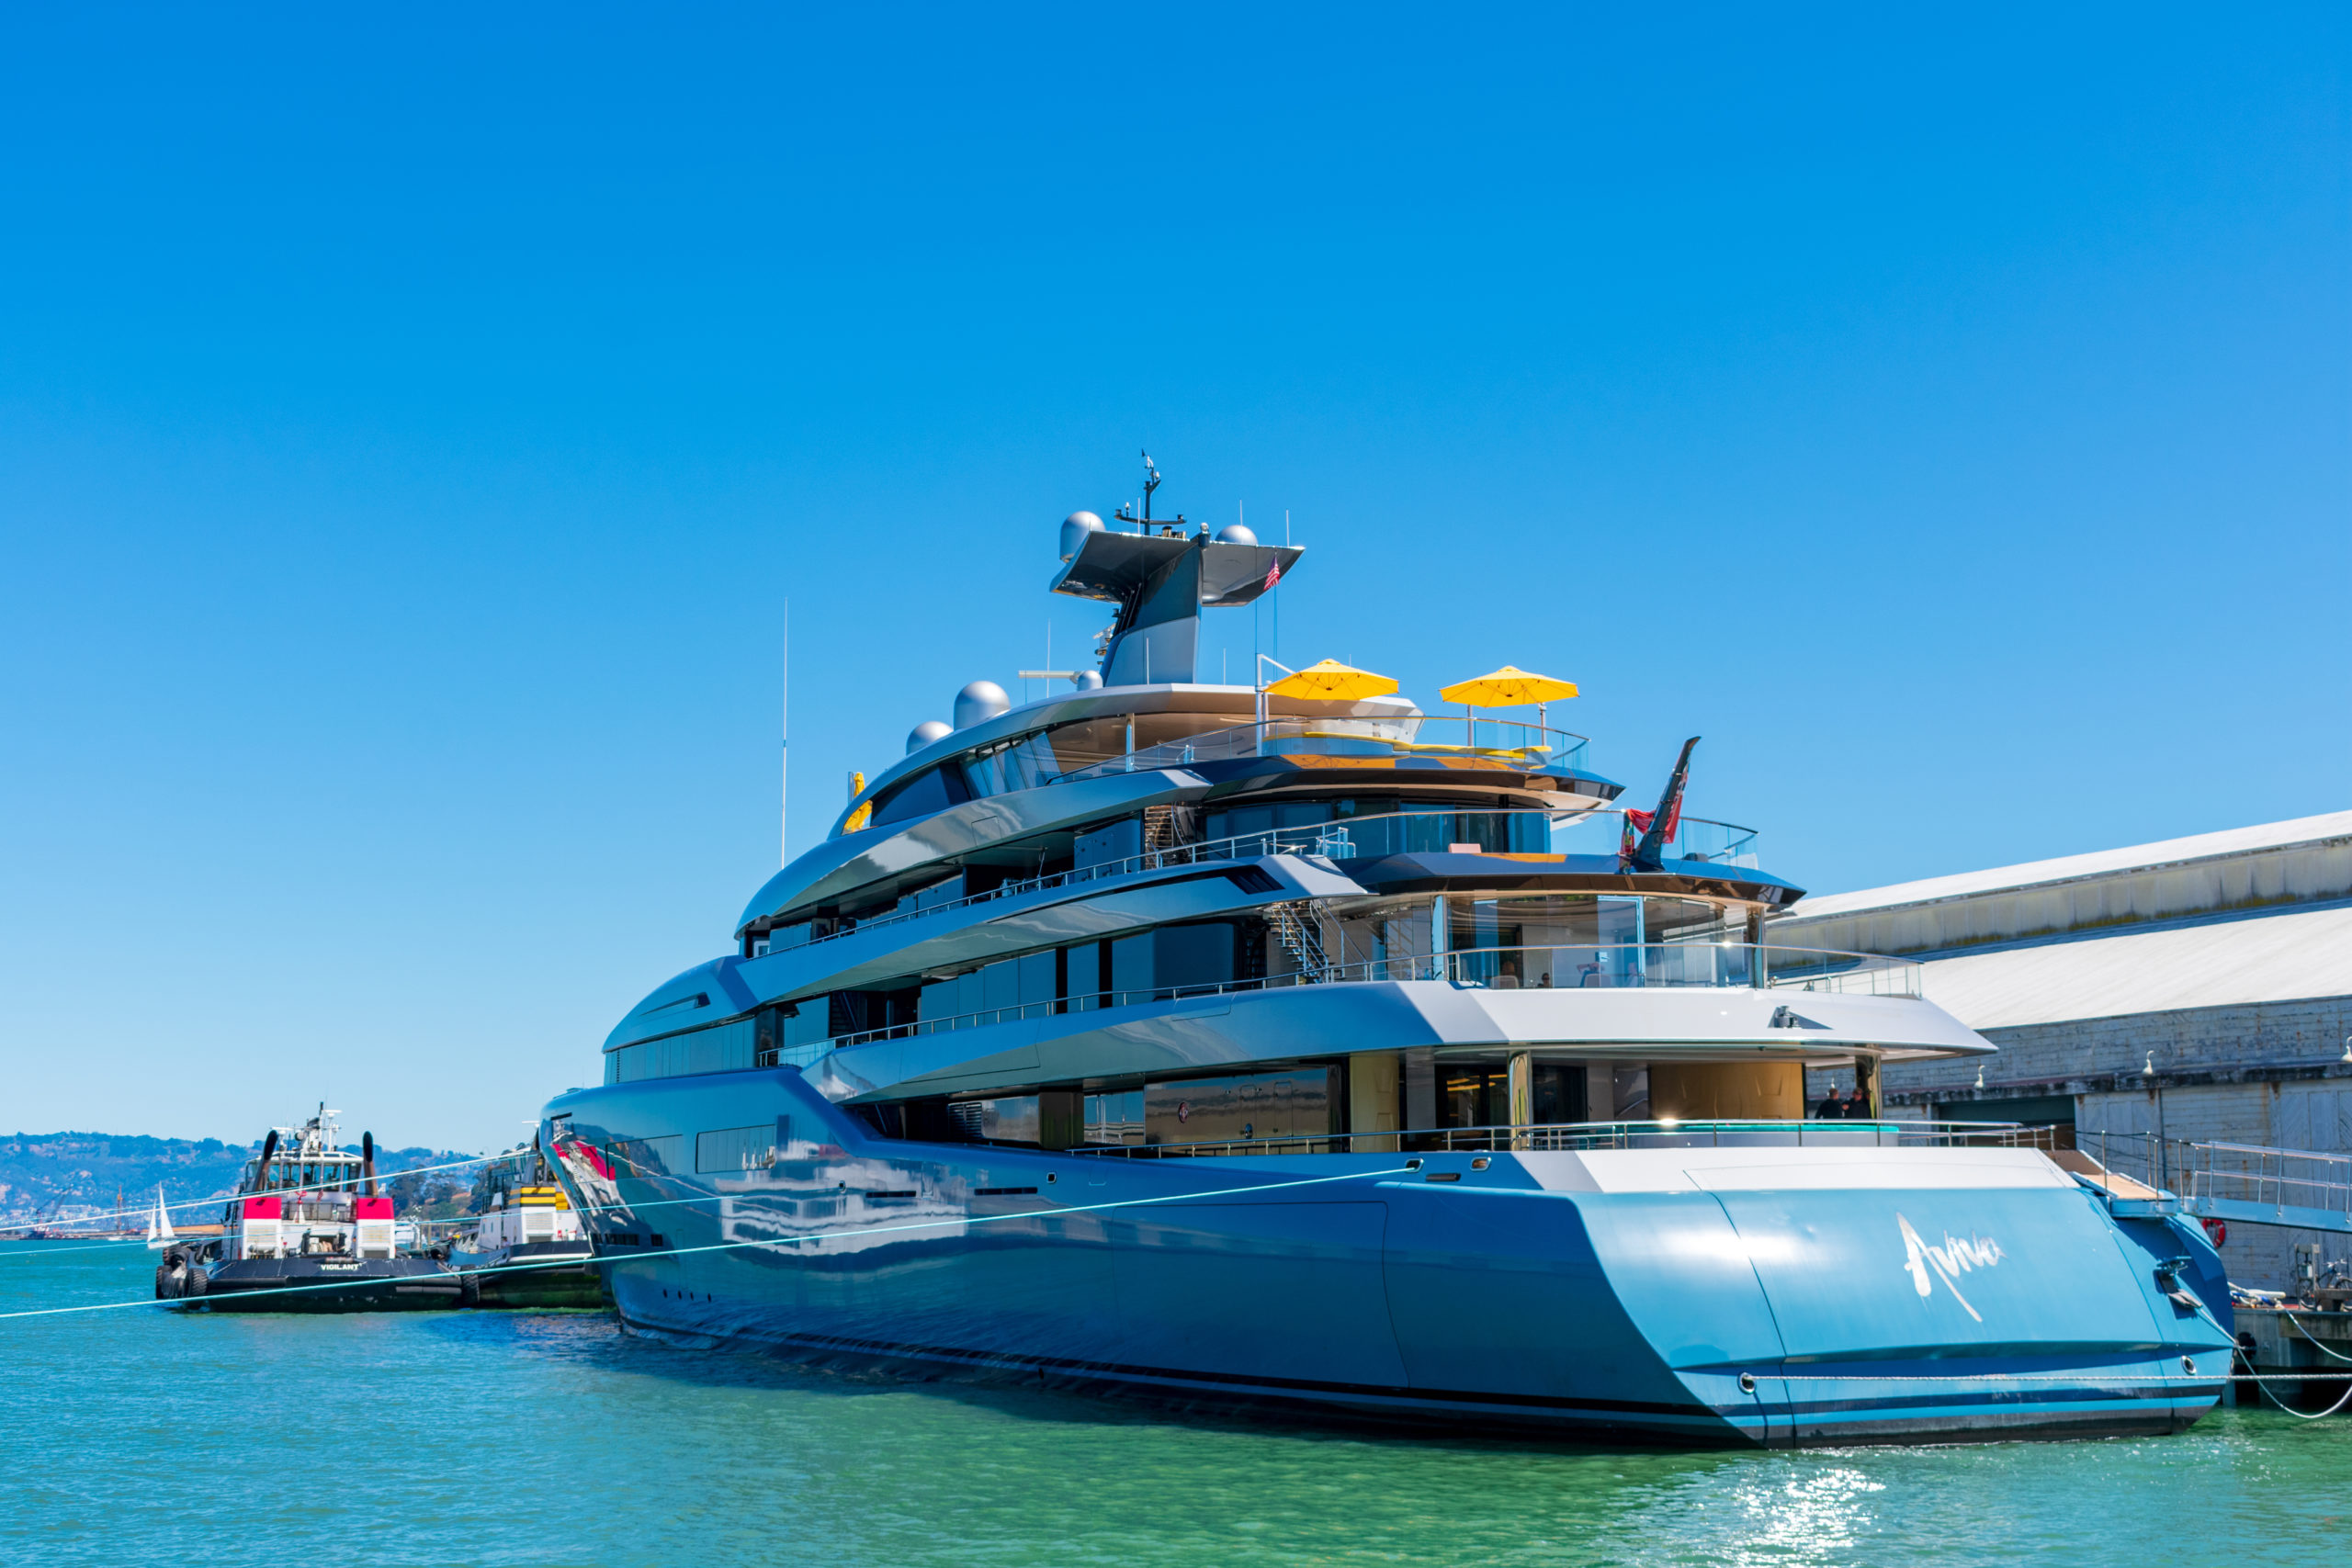 Super Mega Yacht Aviva Owned By British Billionaire Businessman Joe